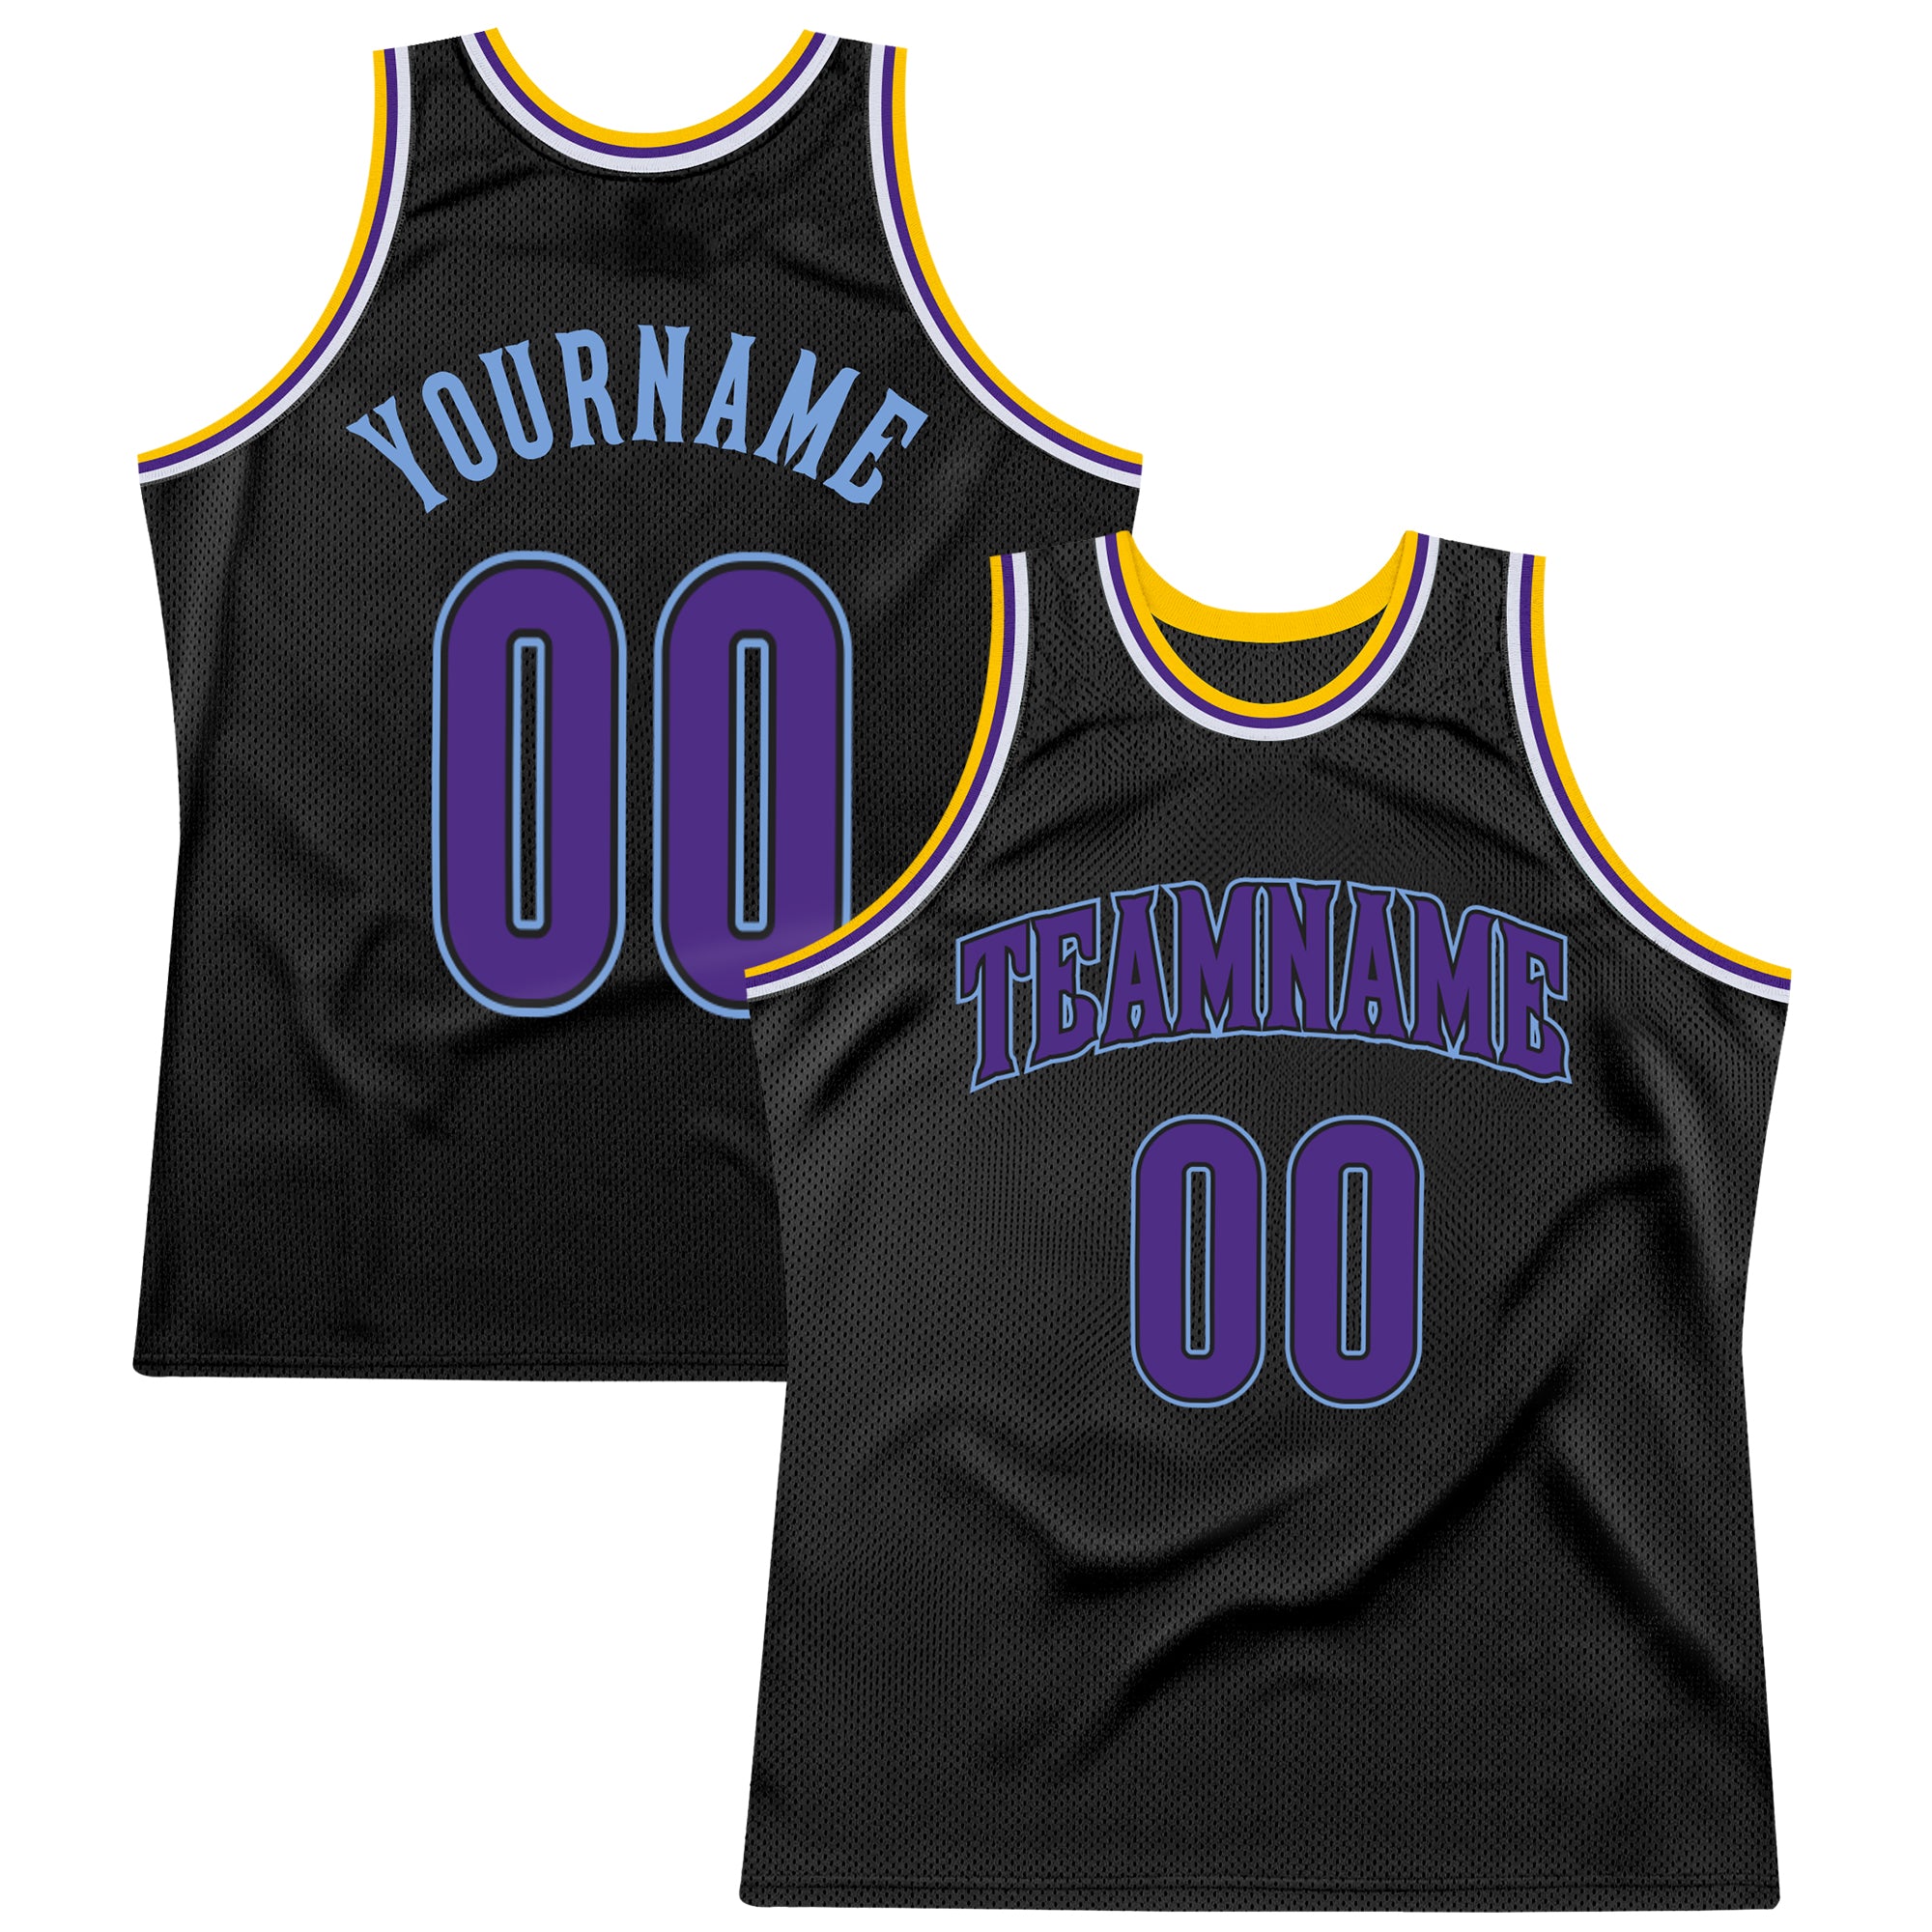 Creat Basketball Authentic Black Purple Throwback Light Blue